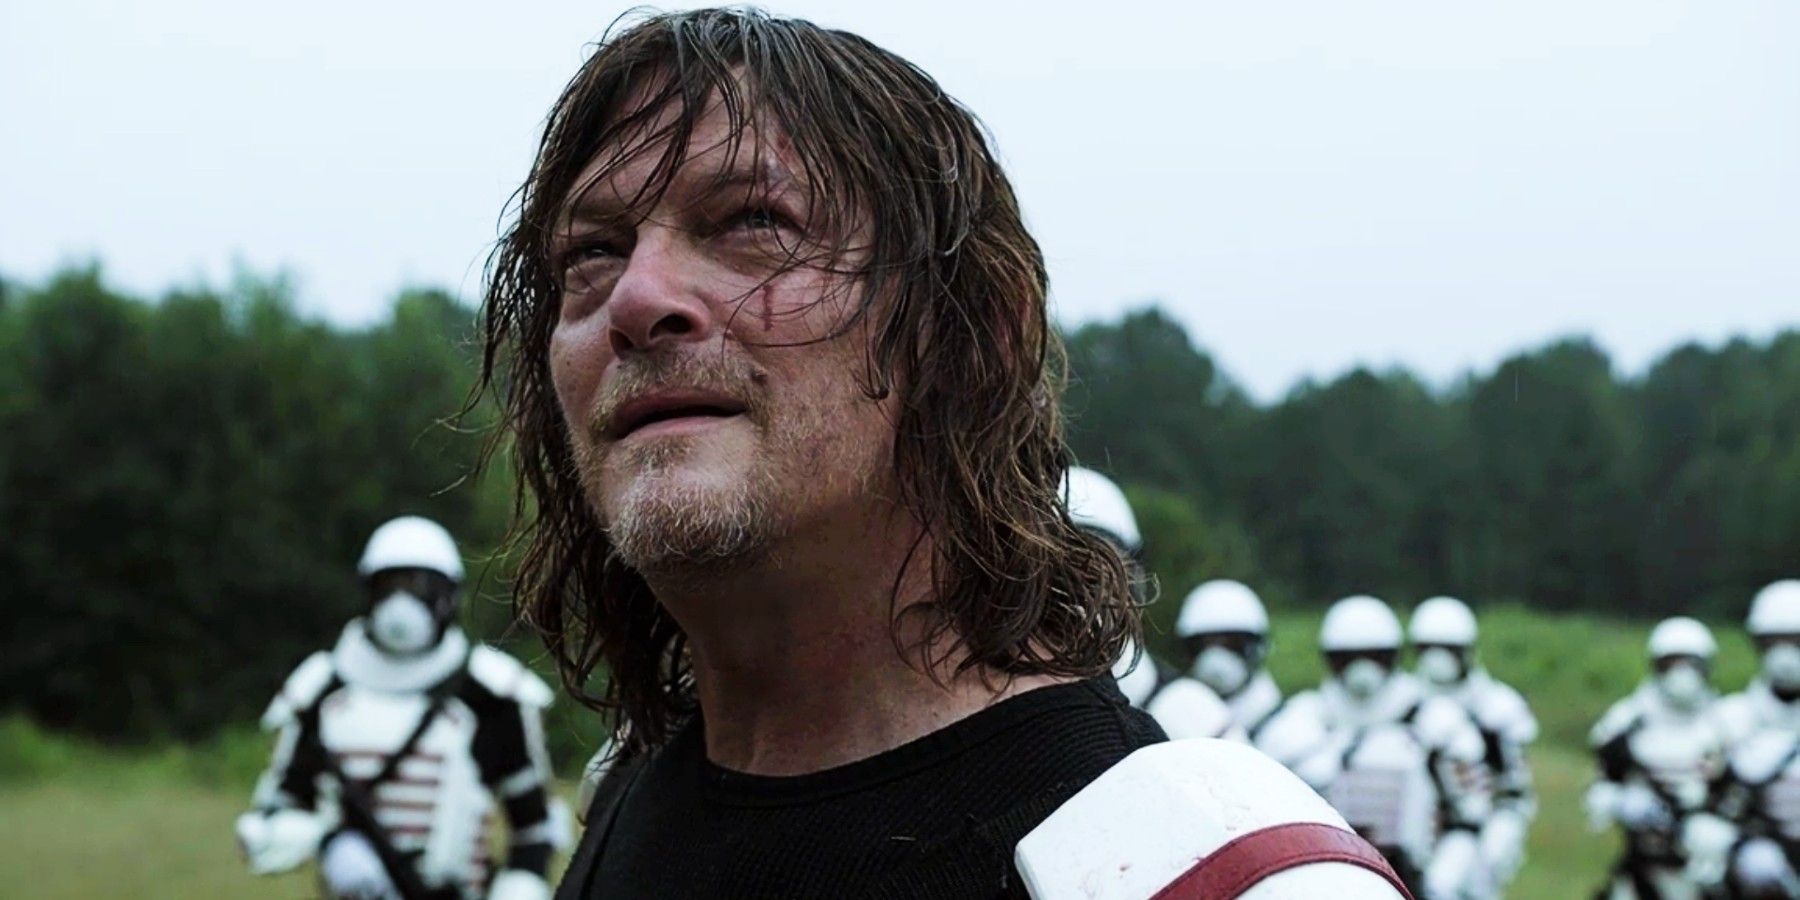 Daryl in Commonwealth soldier uniform on The Walking Dead season 11